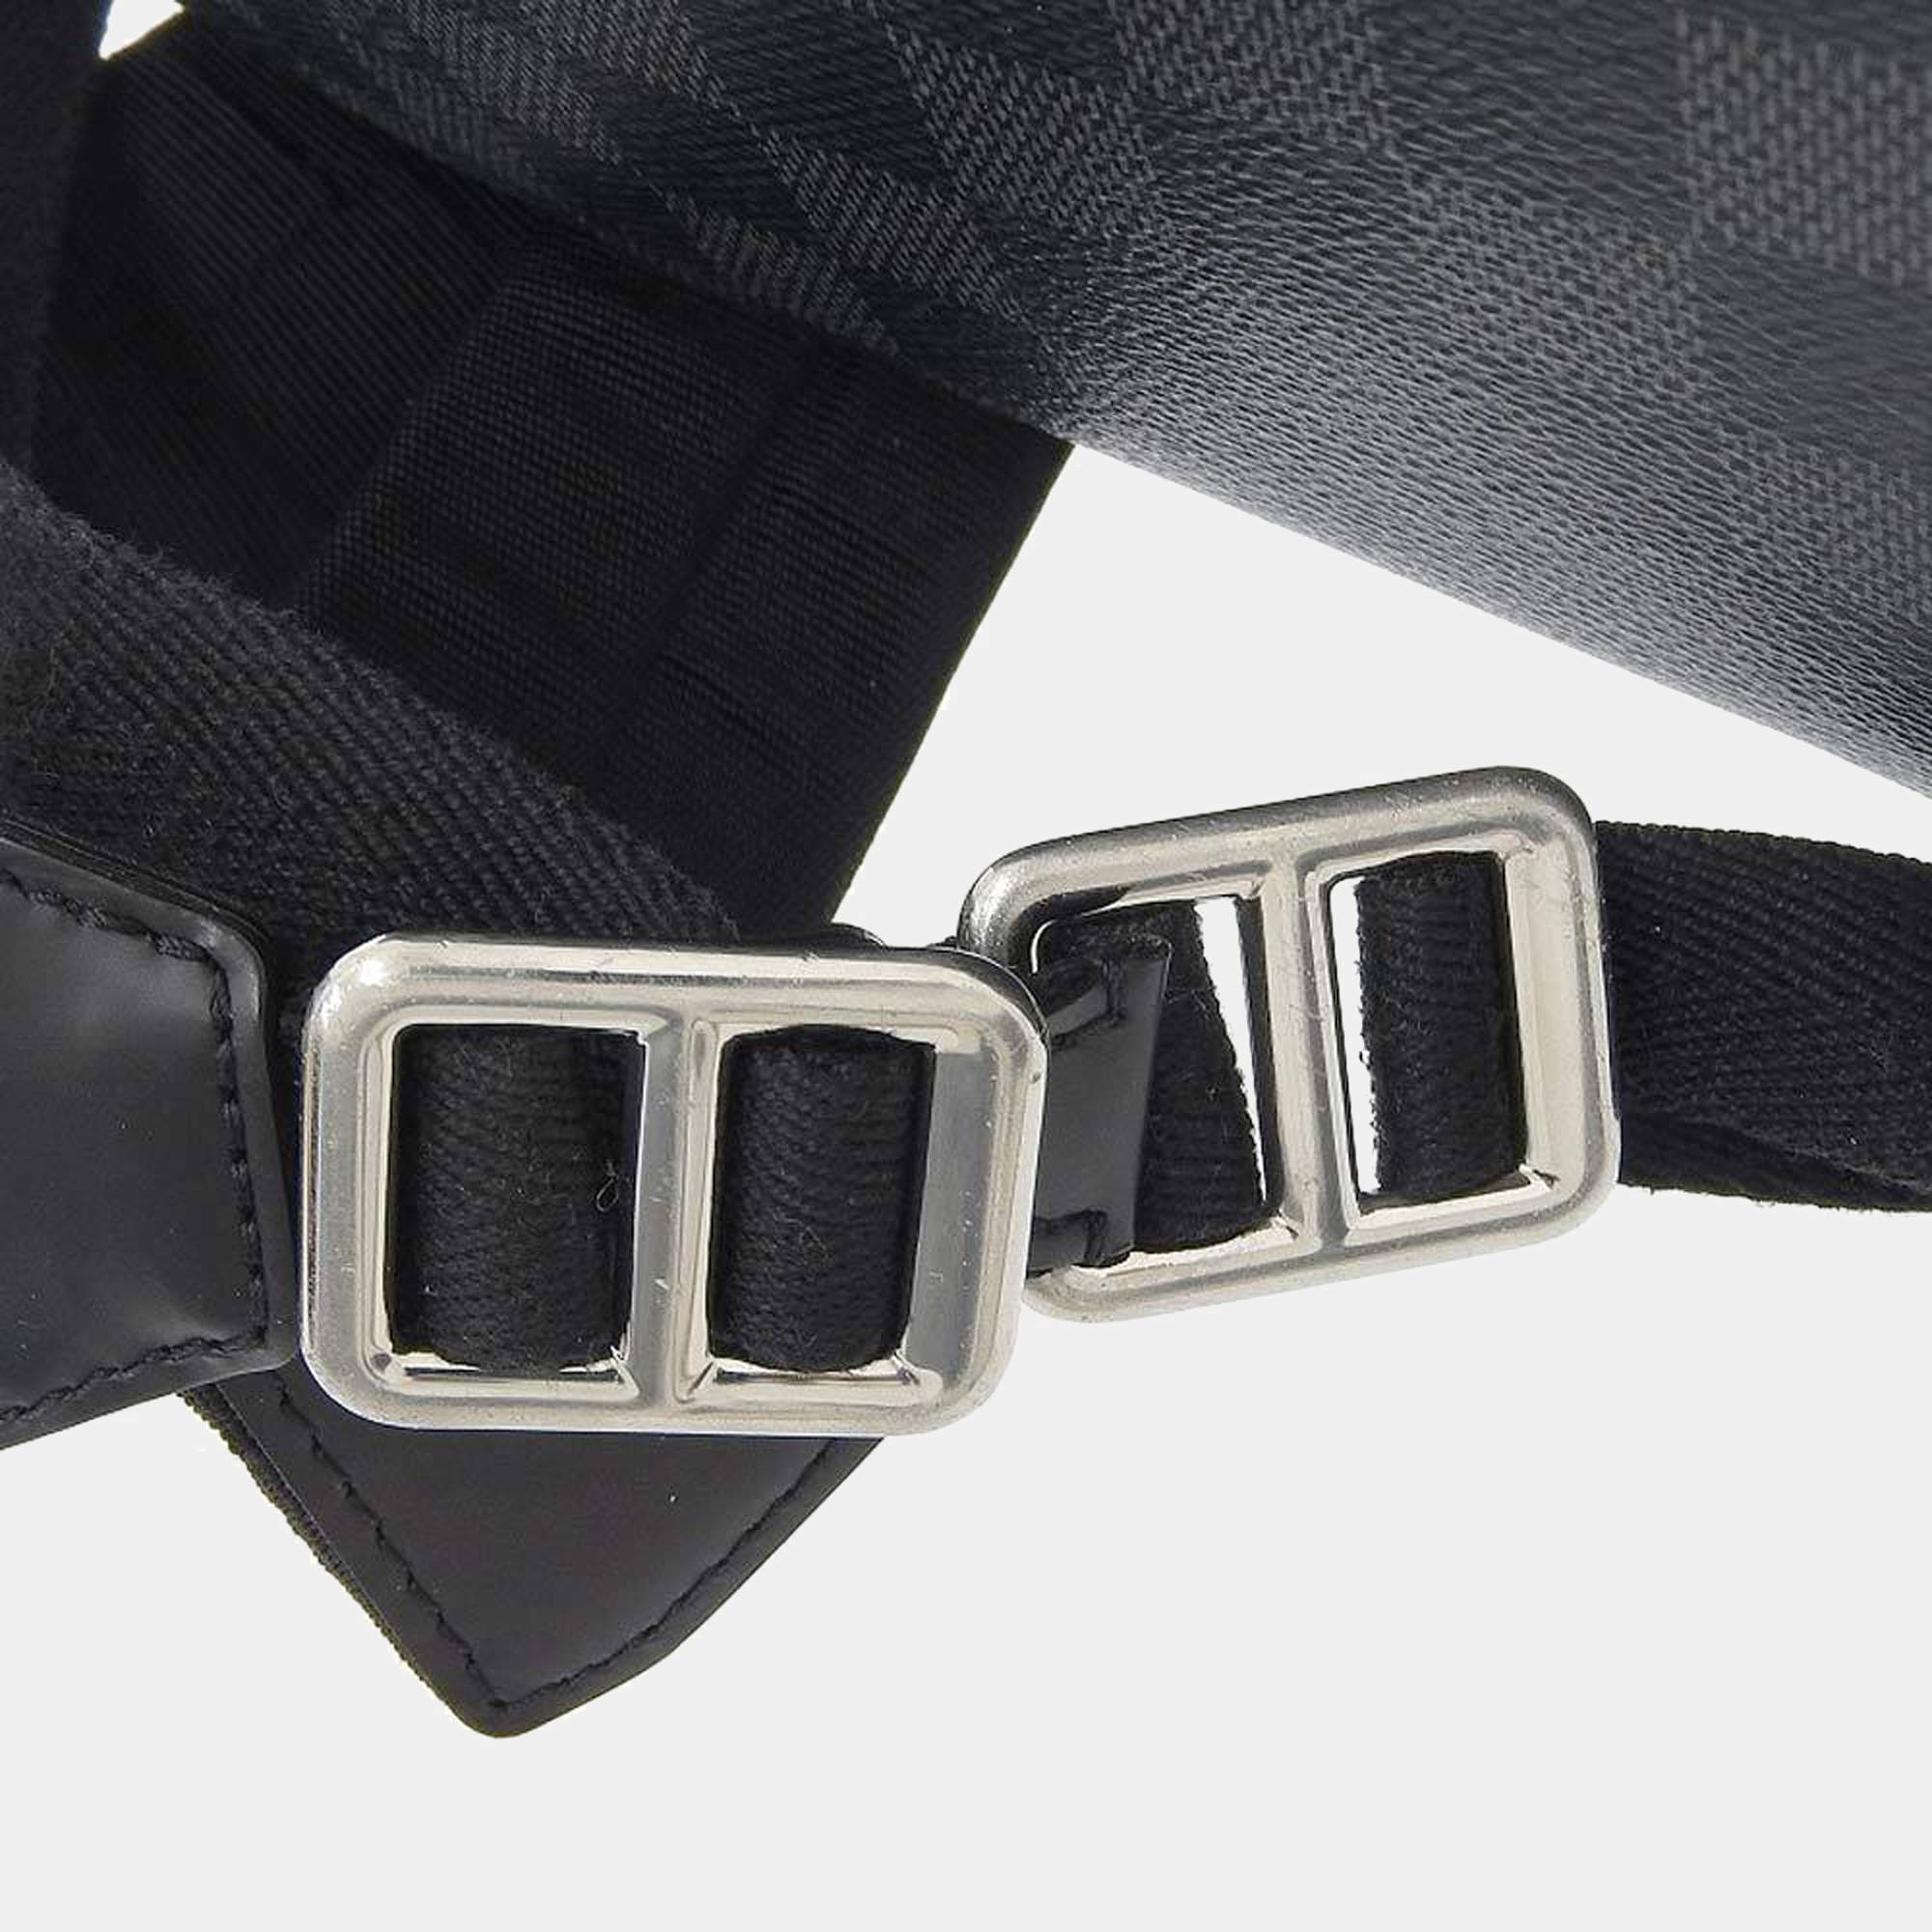 Louis Vuitton Josh Backpack Damier Graphite Black 22911414